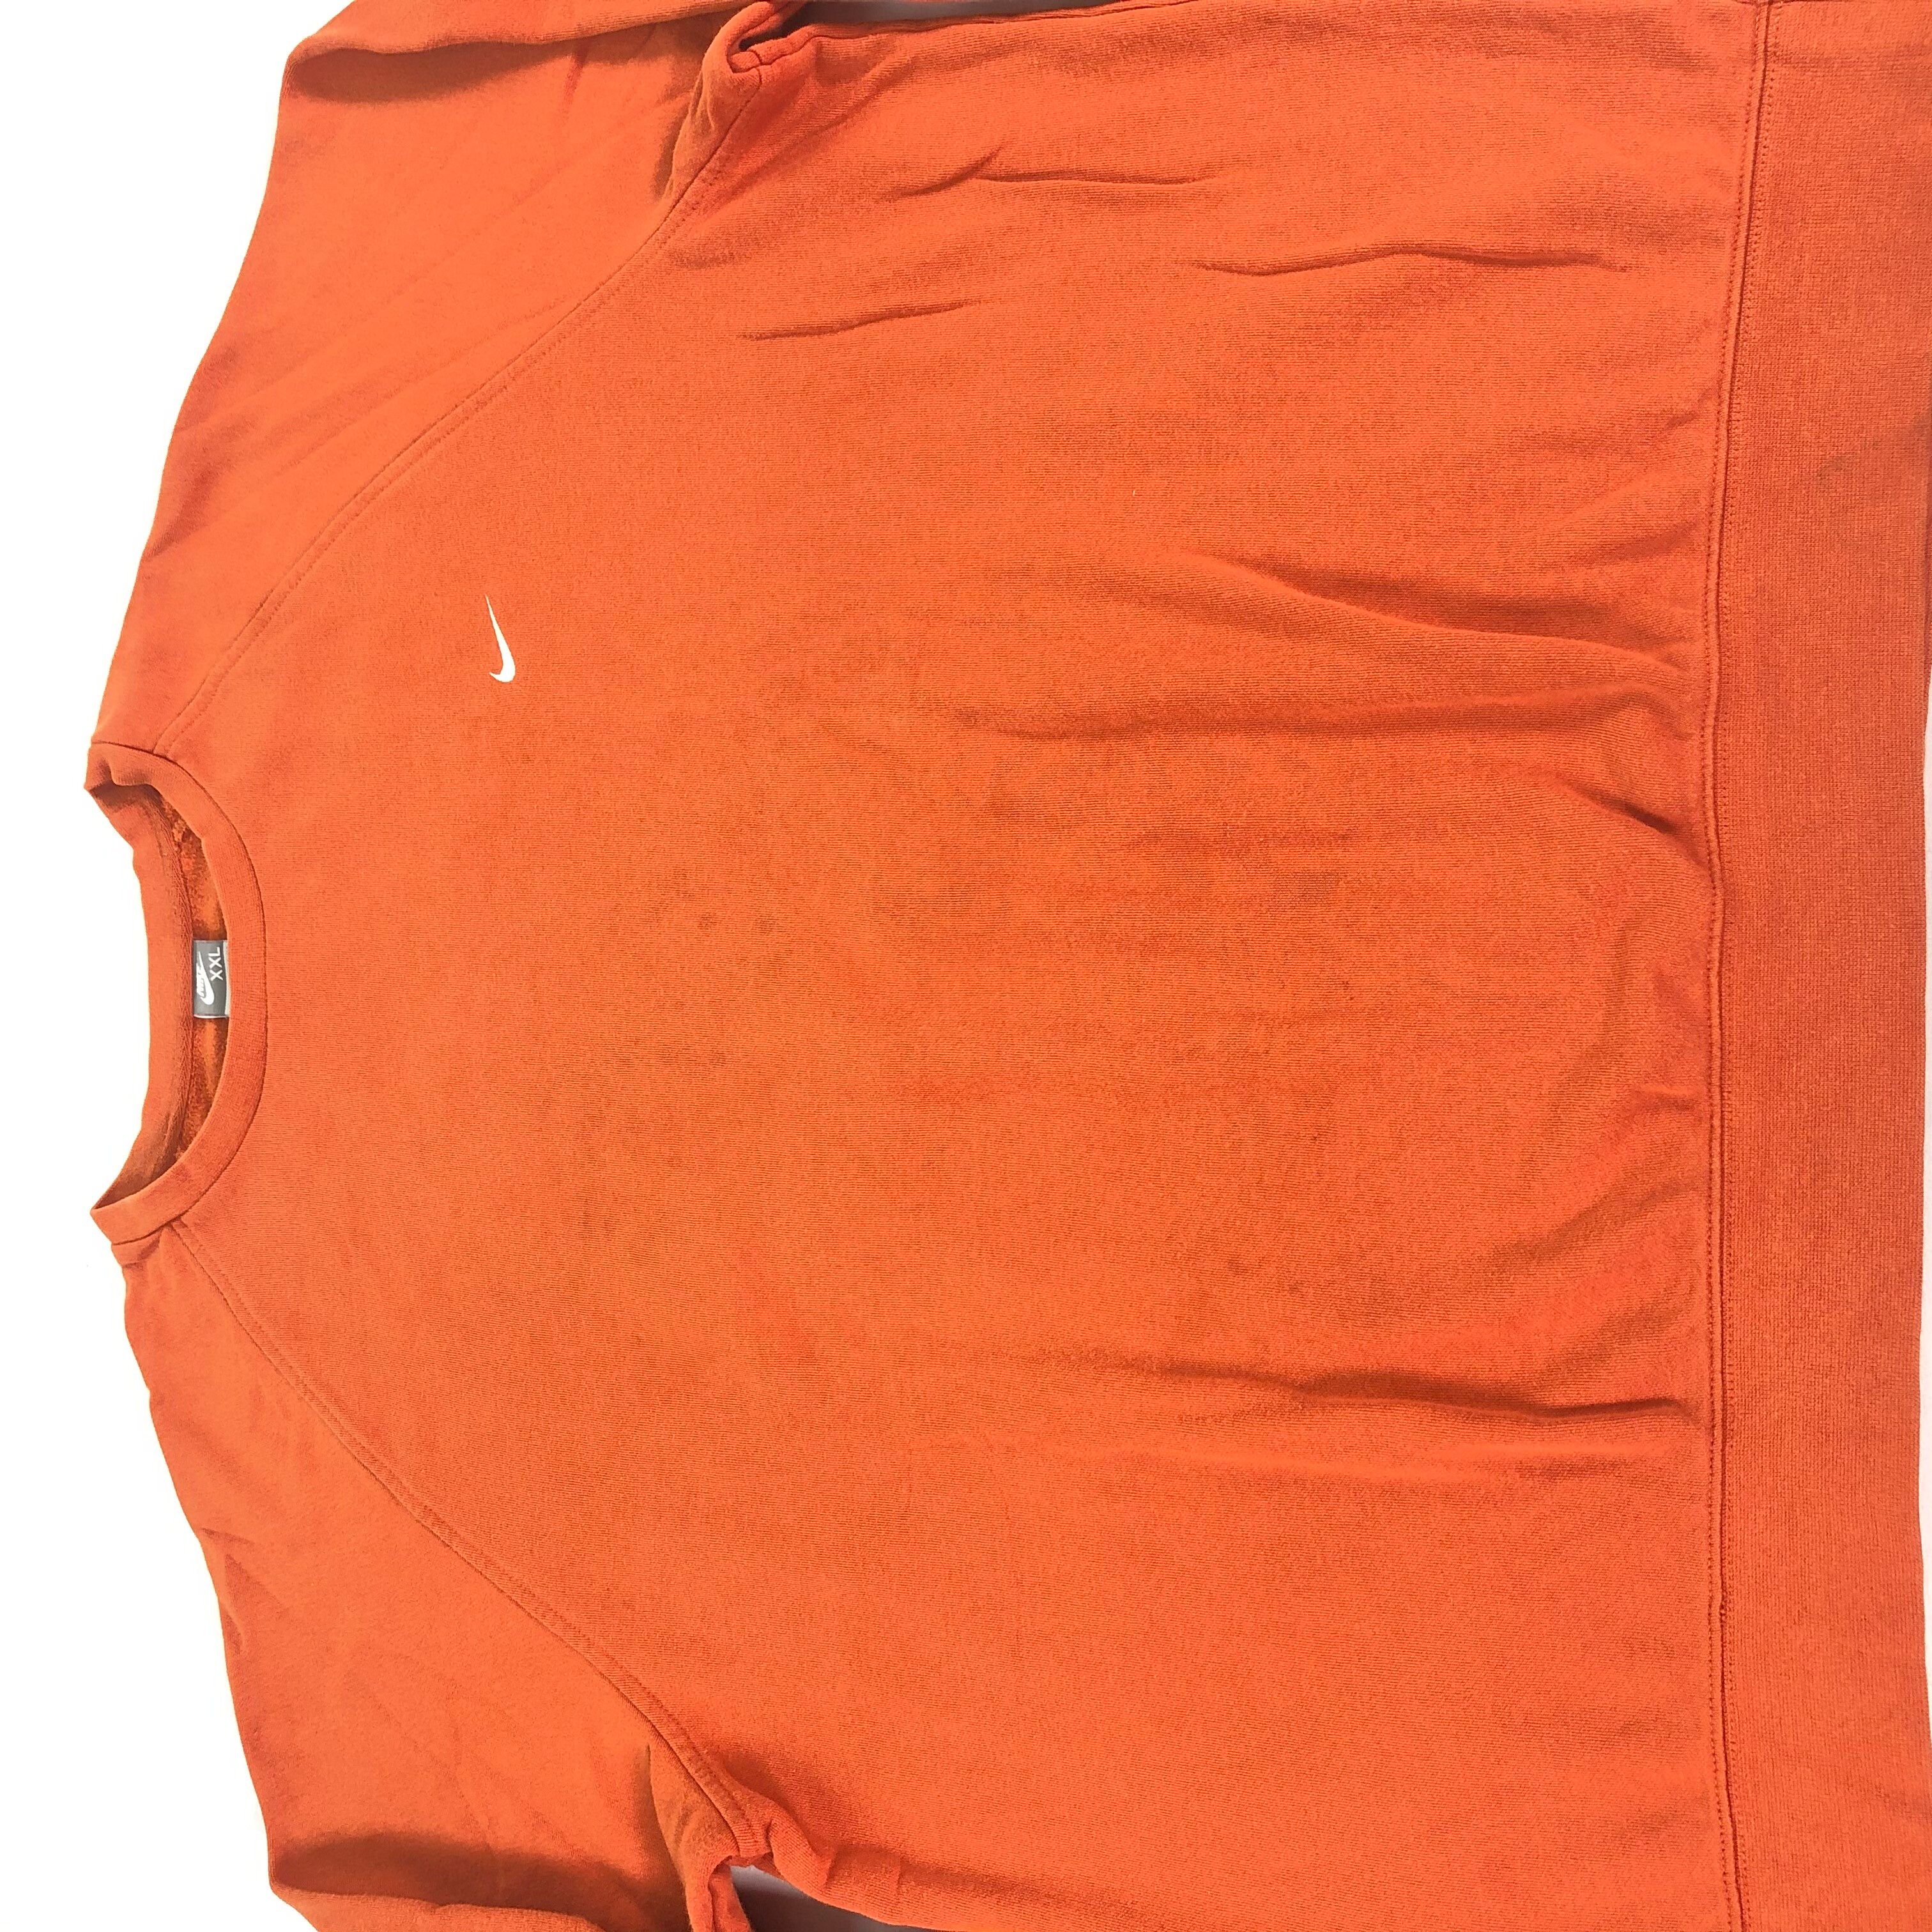 Nike Nike Sweatshirt Logo Pull Over Orange Colour Size US XXL / EU 58 / 5 - 2 Preview